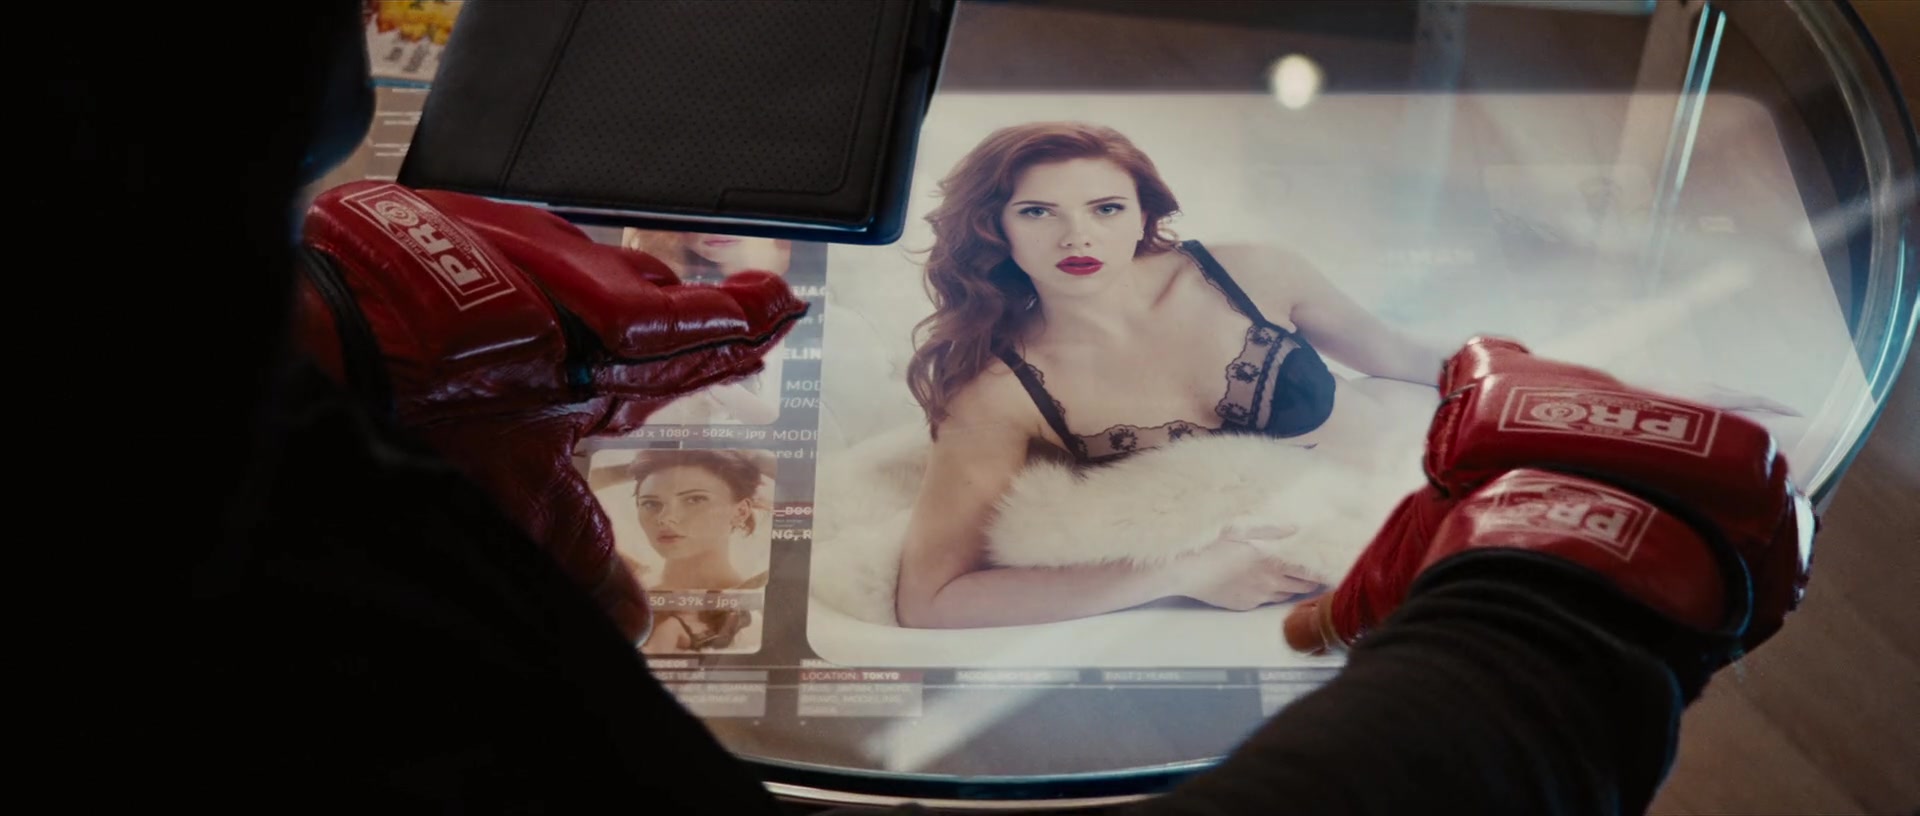 Tony Stark (Robert Downey Jr.) looks into Natasha Romanoff (Scarlet Johansson) in Iron Man 2 (2010), Marvel Studios